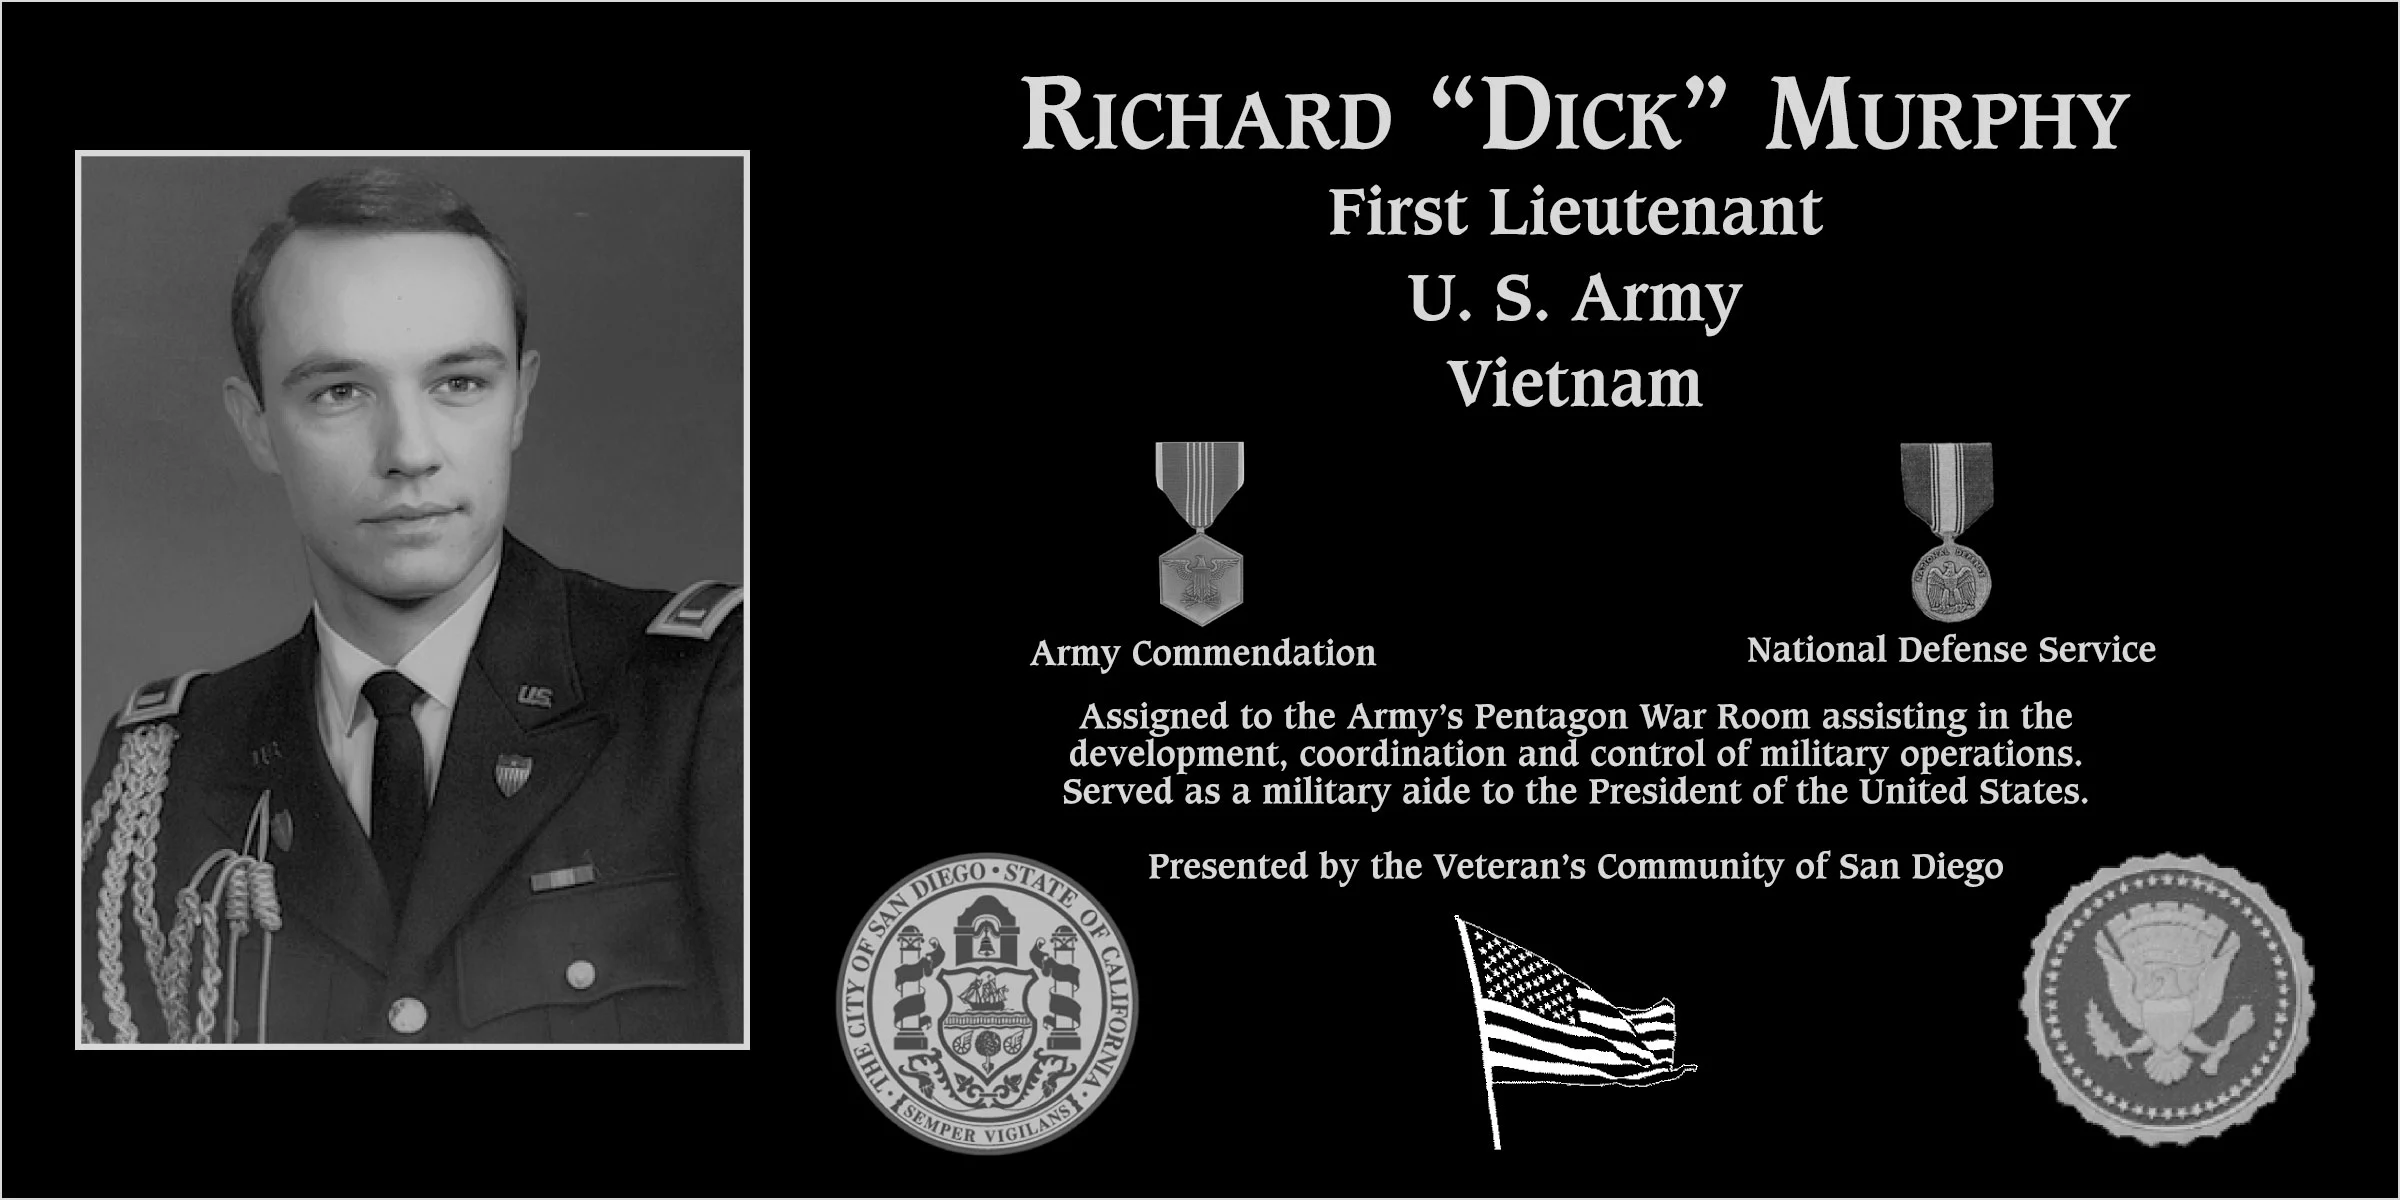 Richard “Dick” Murphy